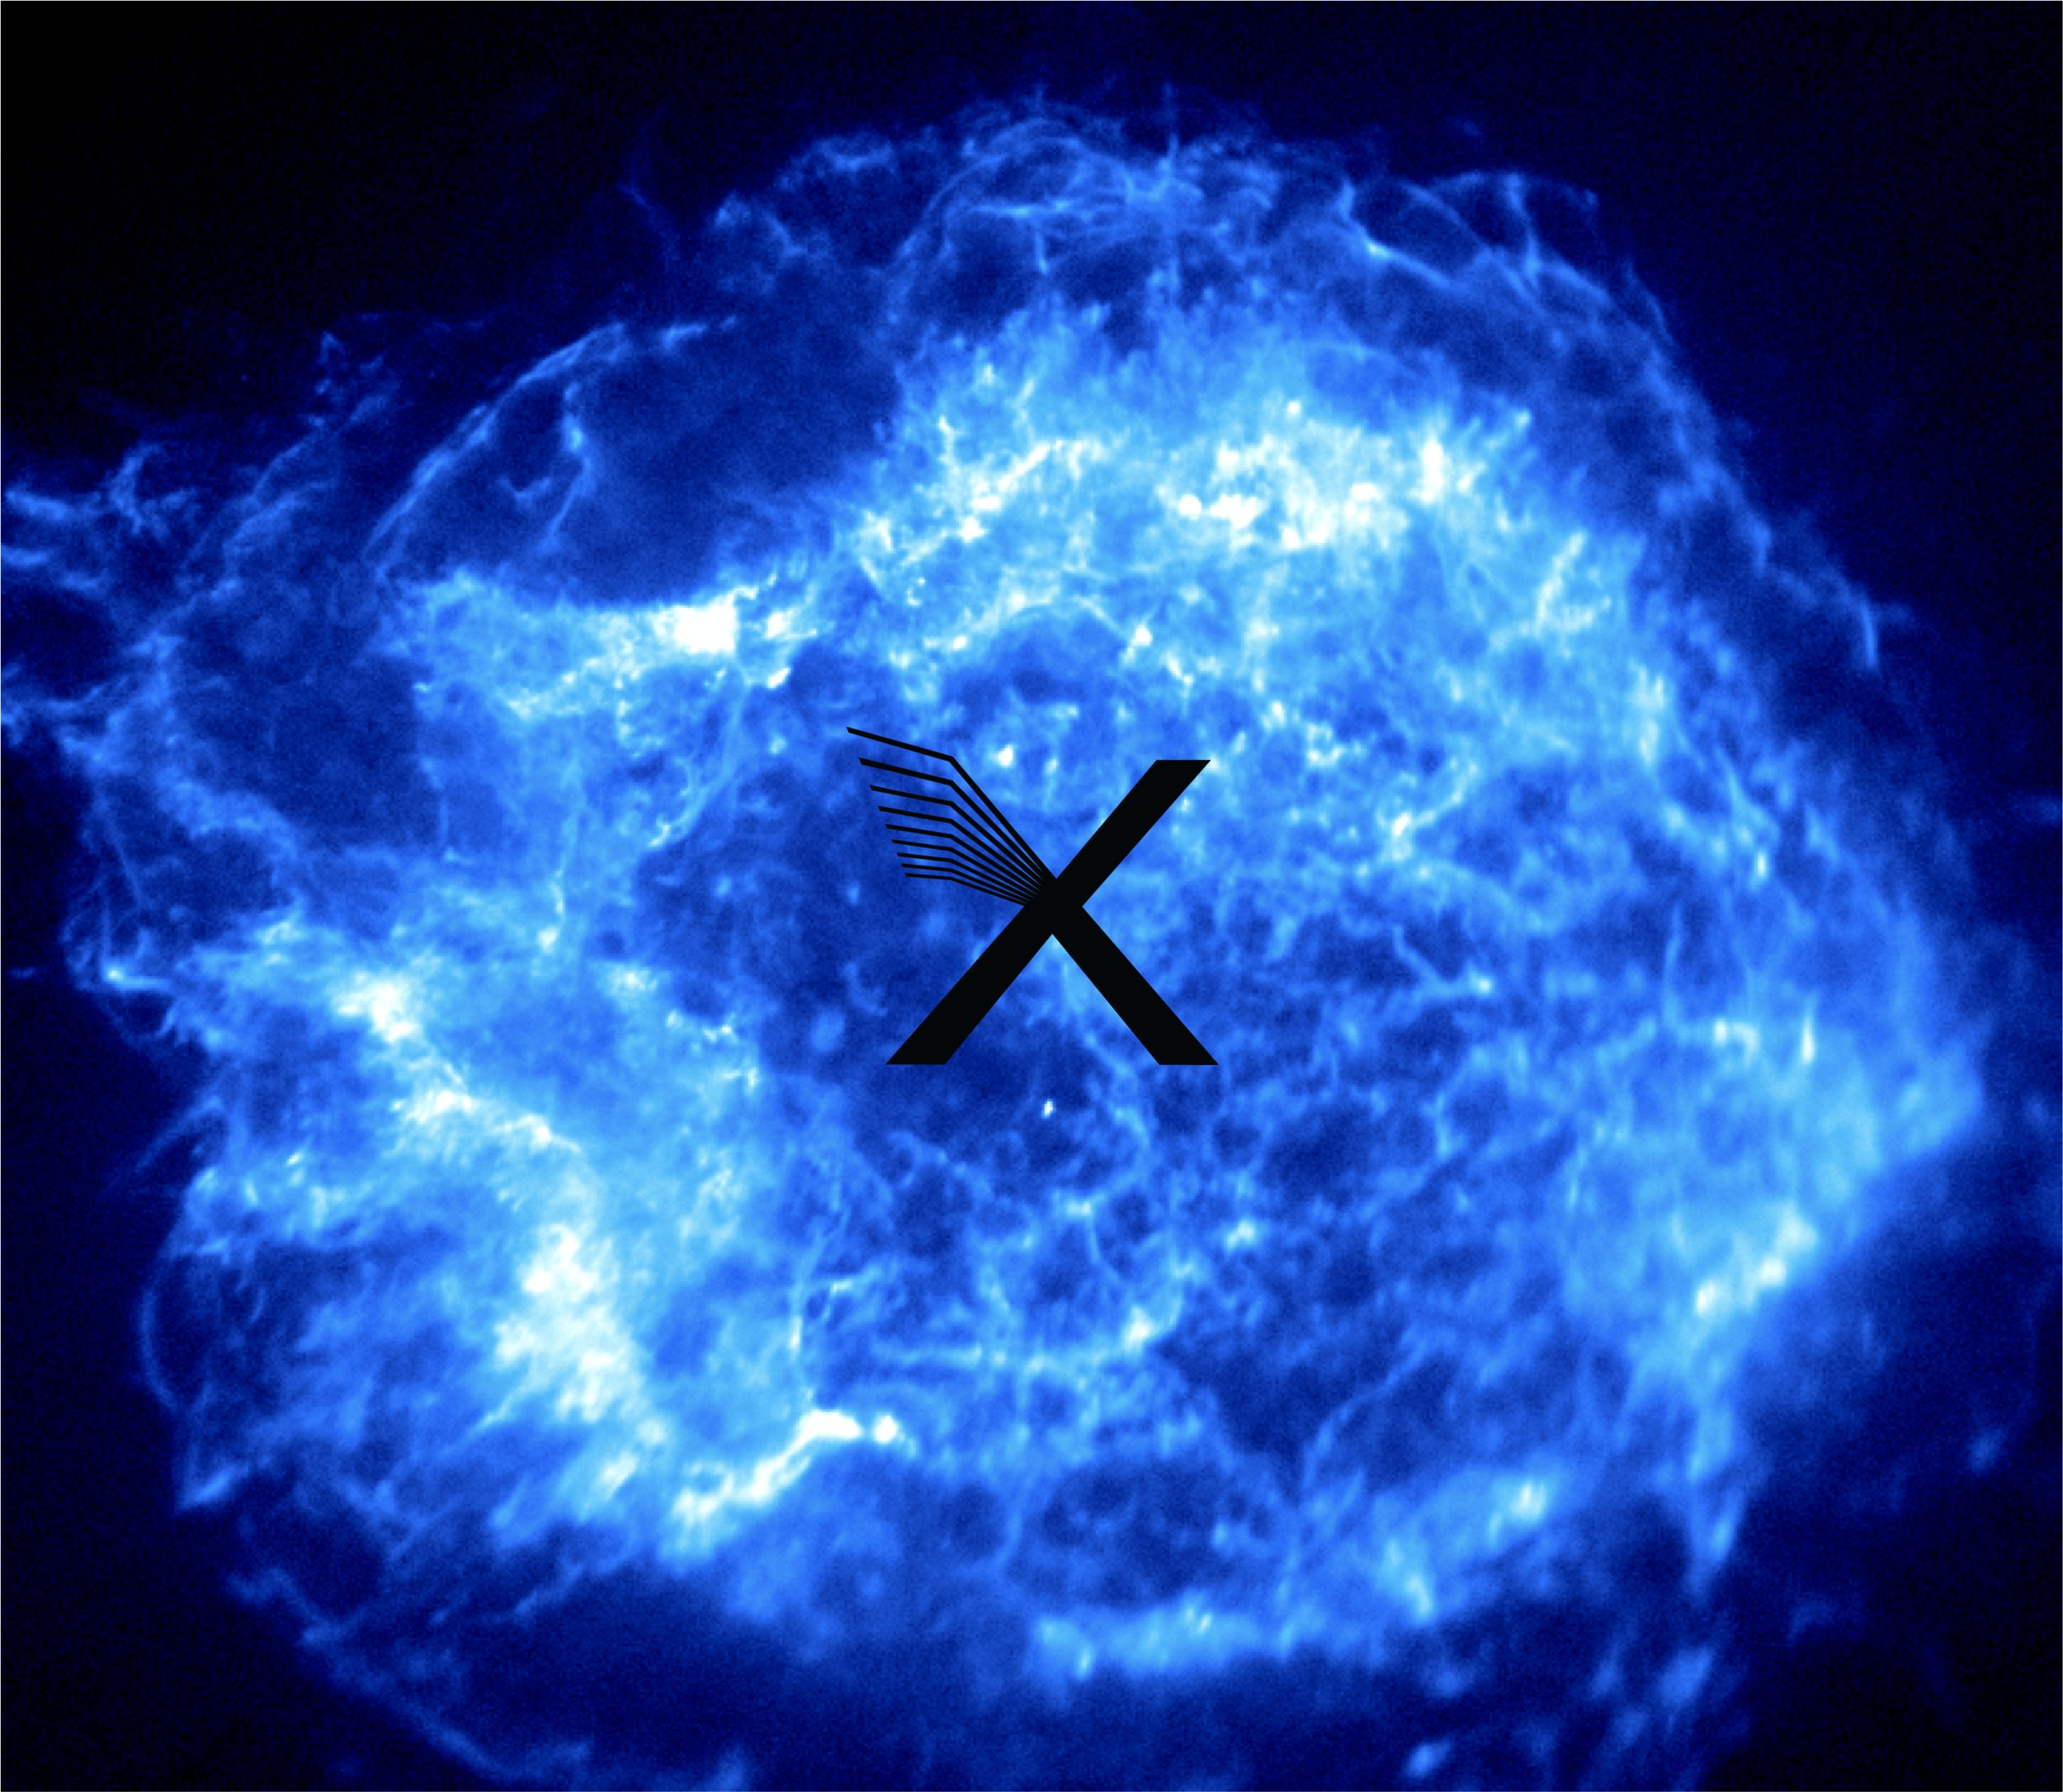  Cassiopeia A Supernova Remnant